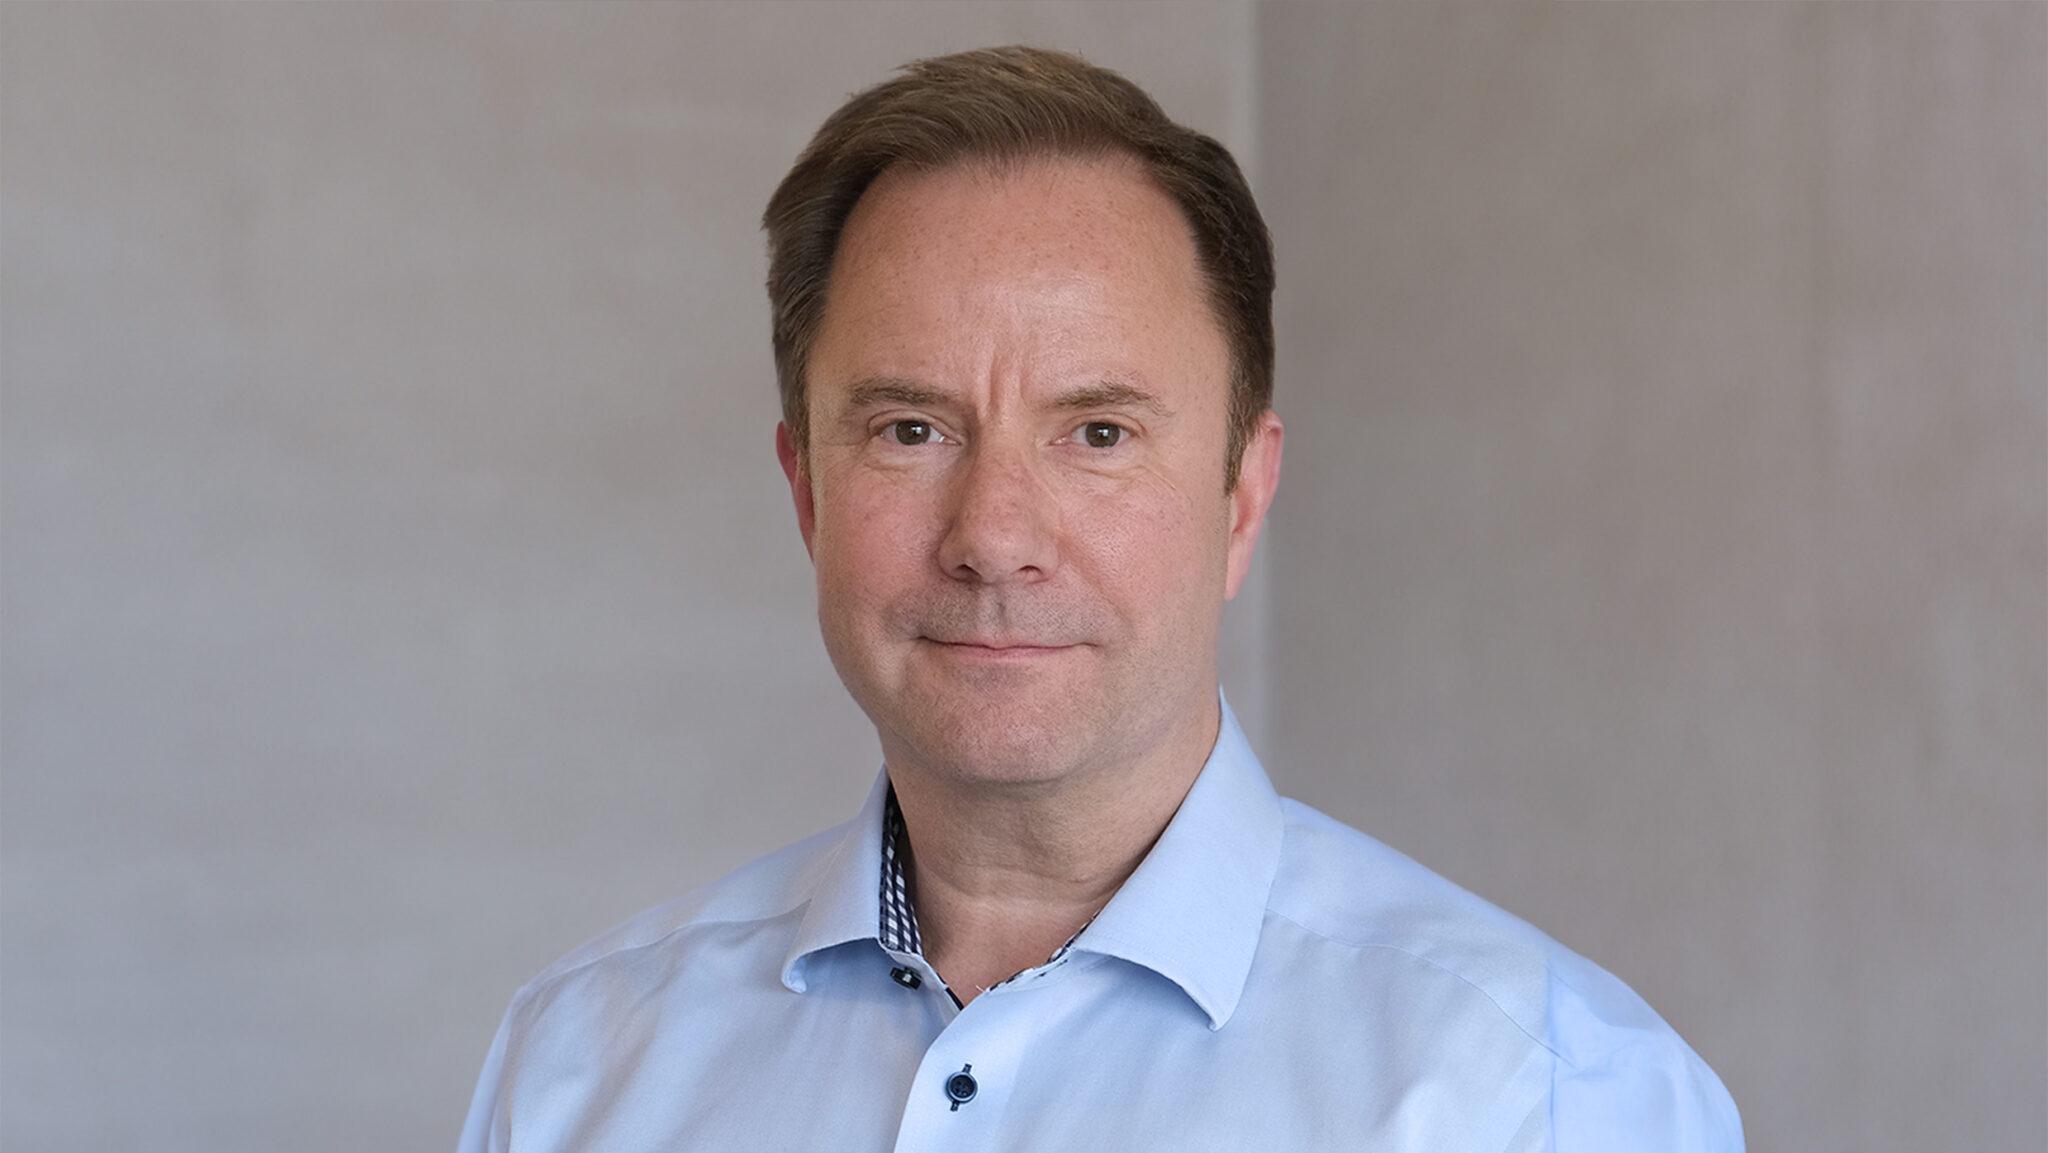 rond-Øystein Bjørnnes, CEO at Kiona, about operation monitoring.